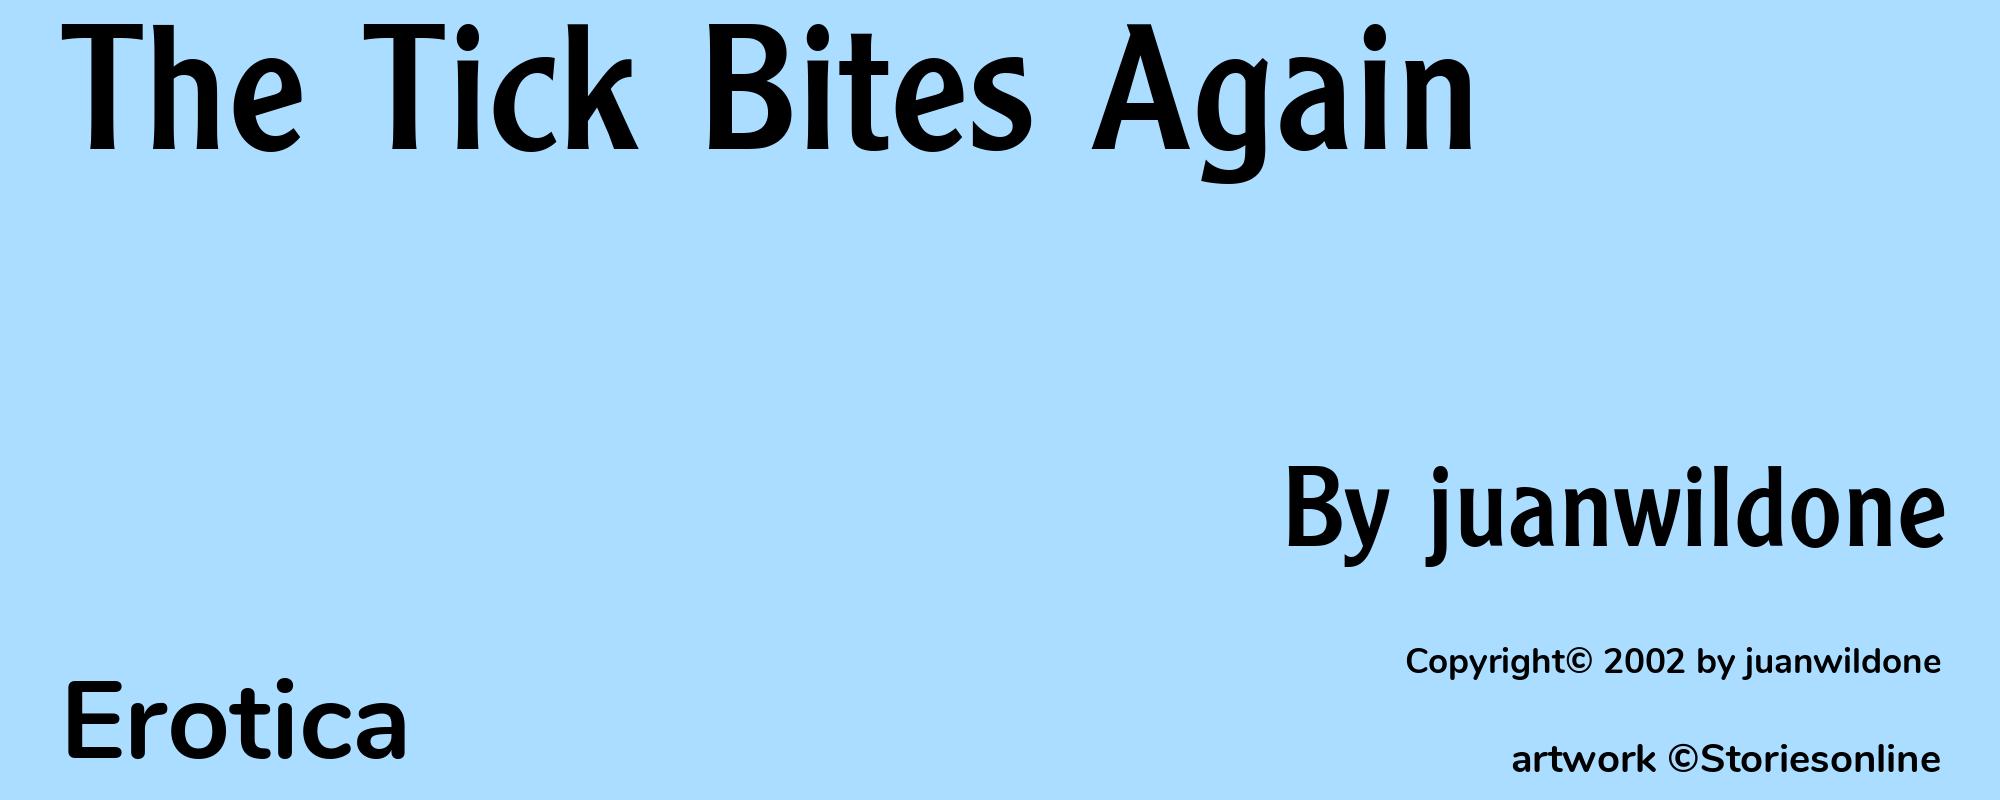 The Tick Bites Again - Cover